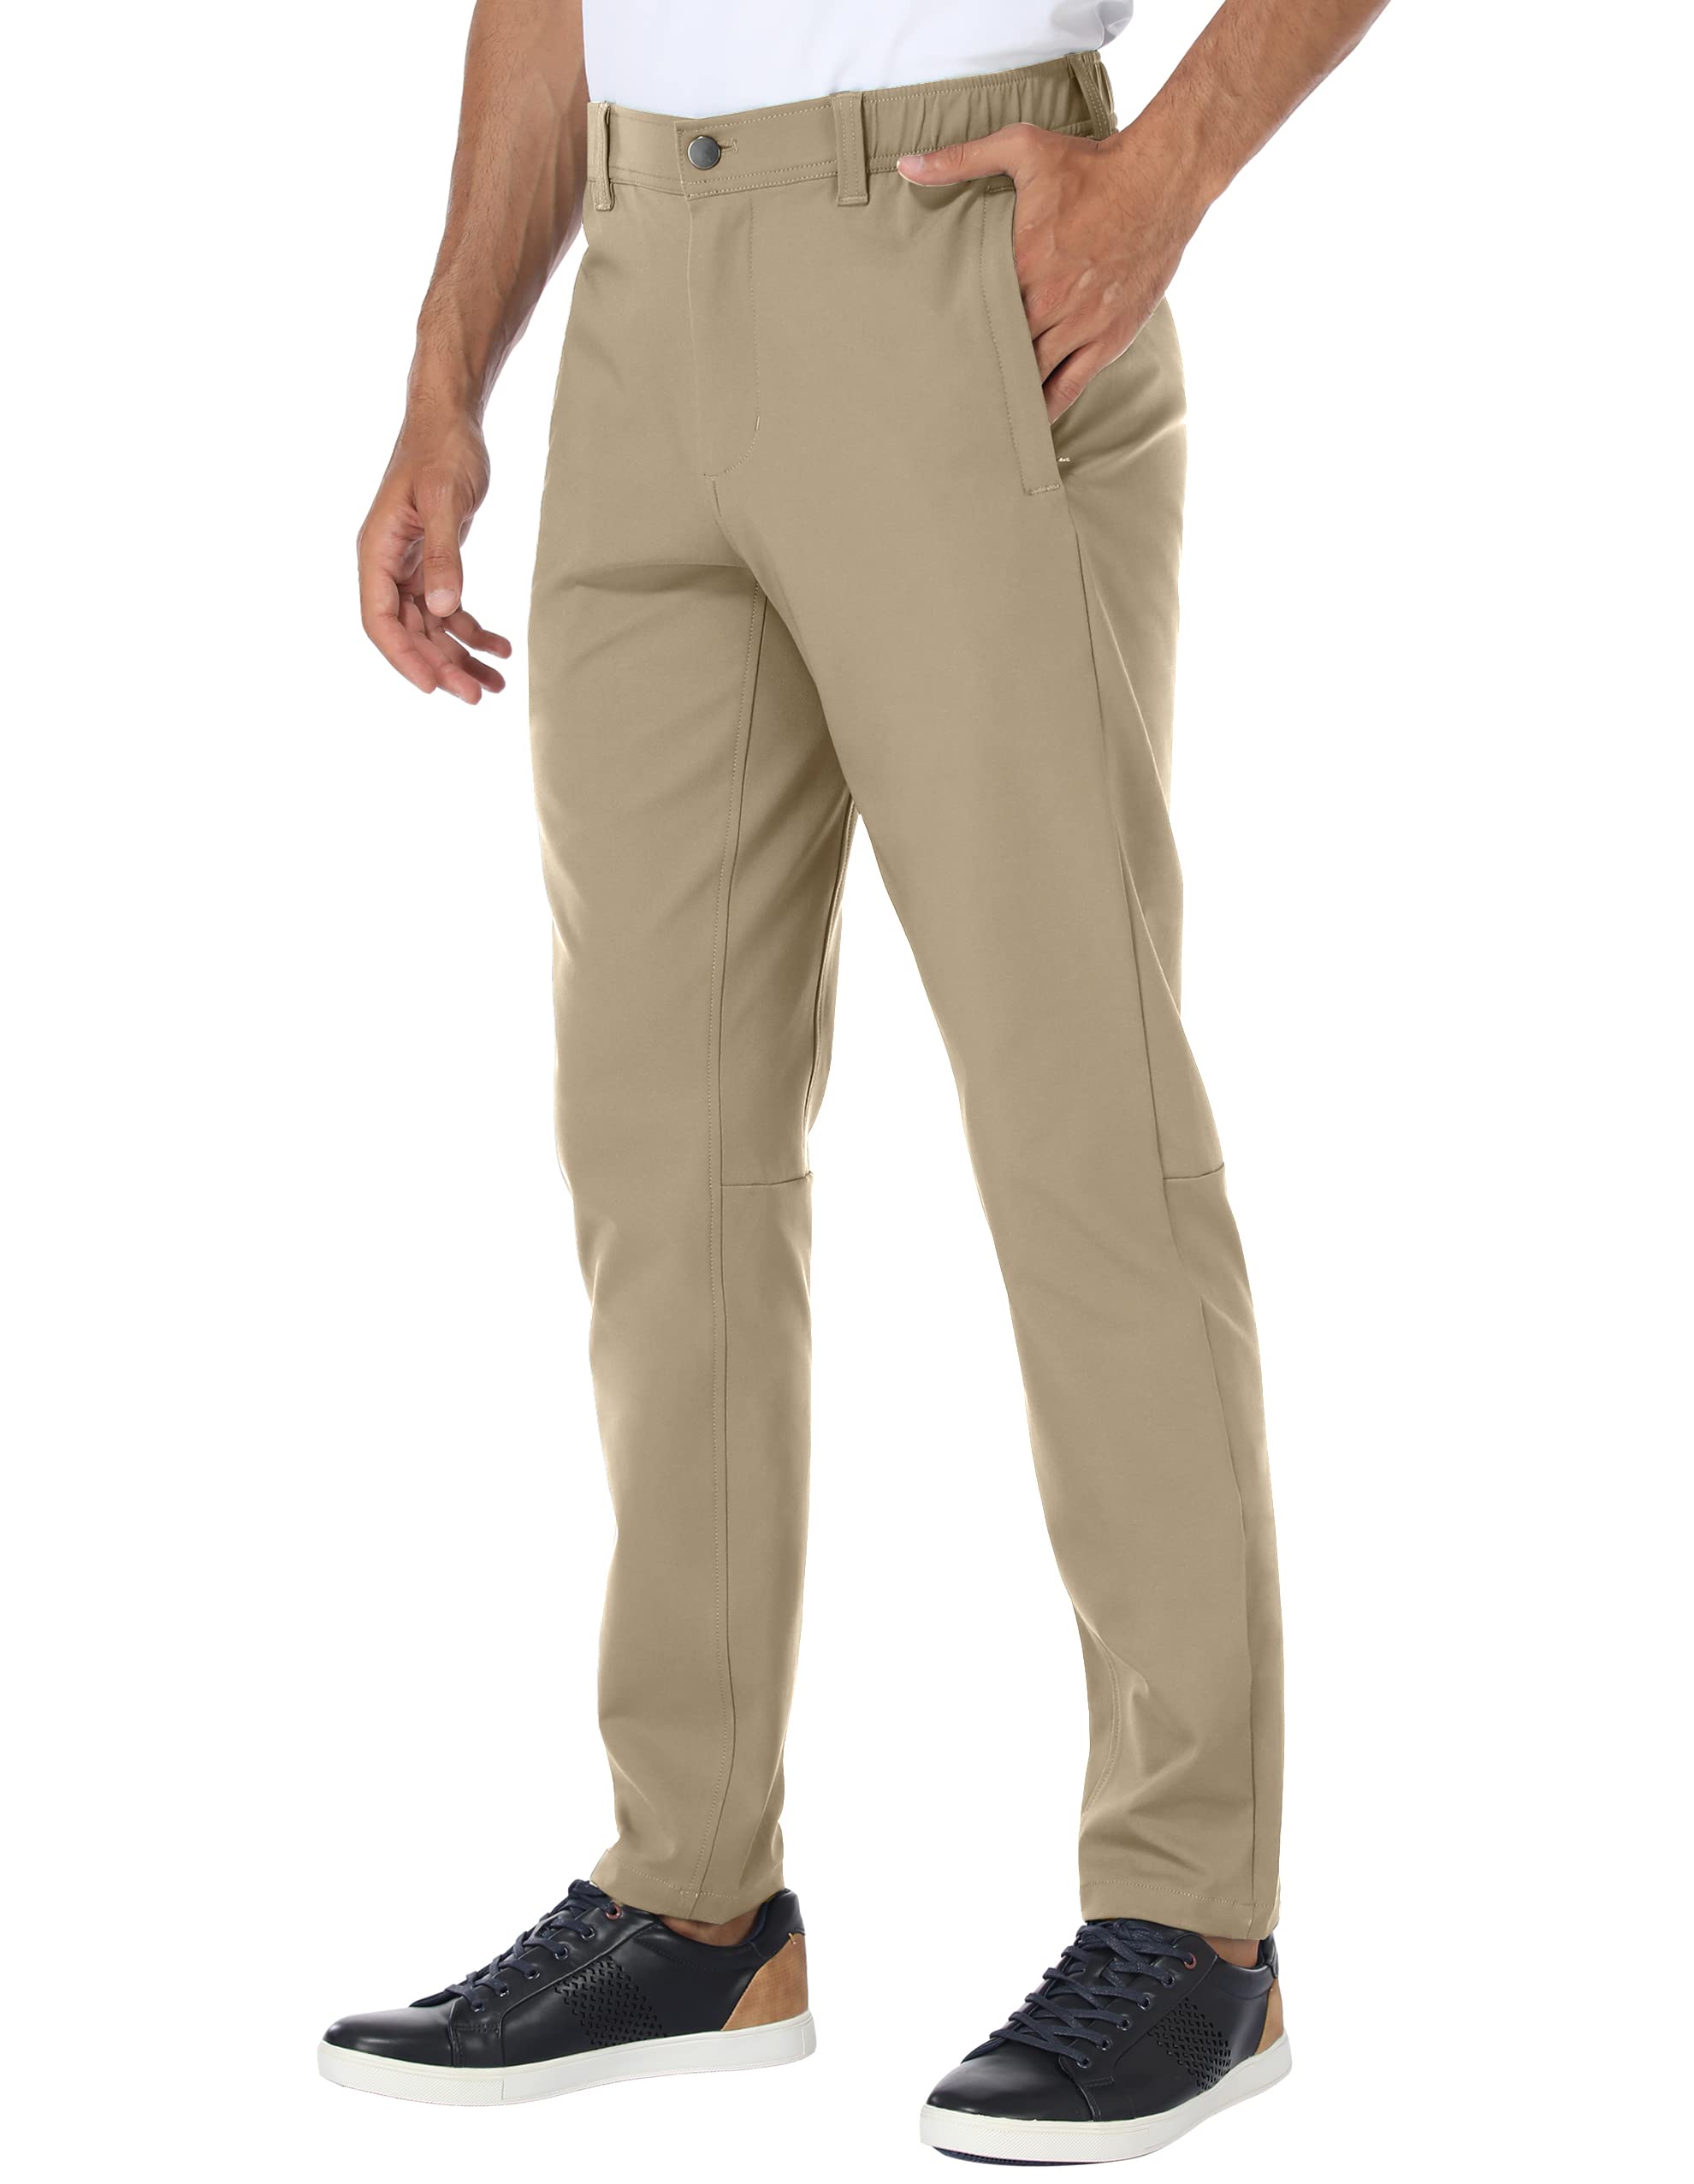 Brown Men's Cotton Casual Pants, Slim Fit at Rs 400 in Bhavnagar | ID:  2852539276030